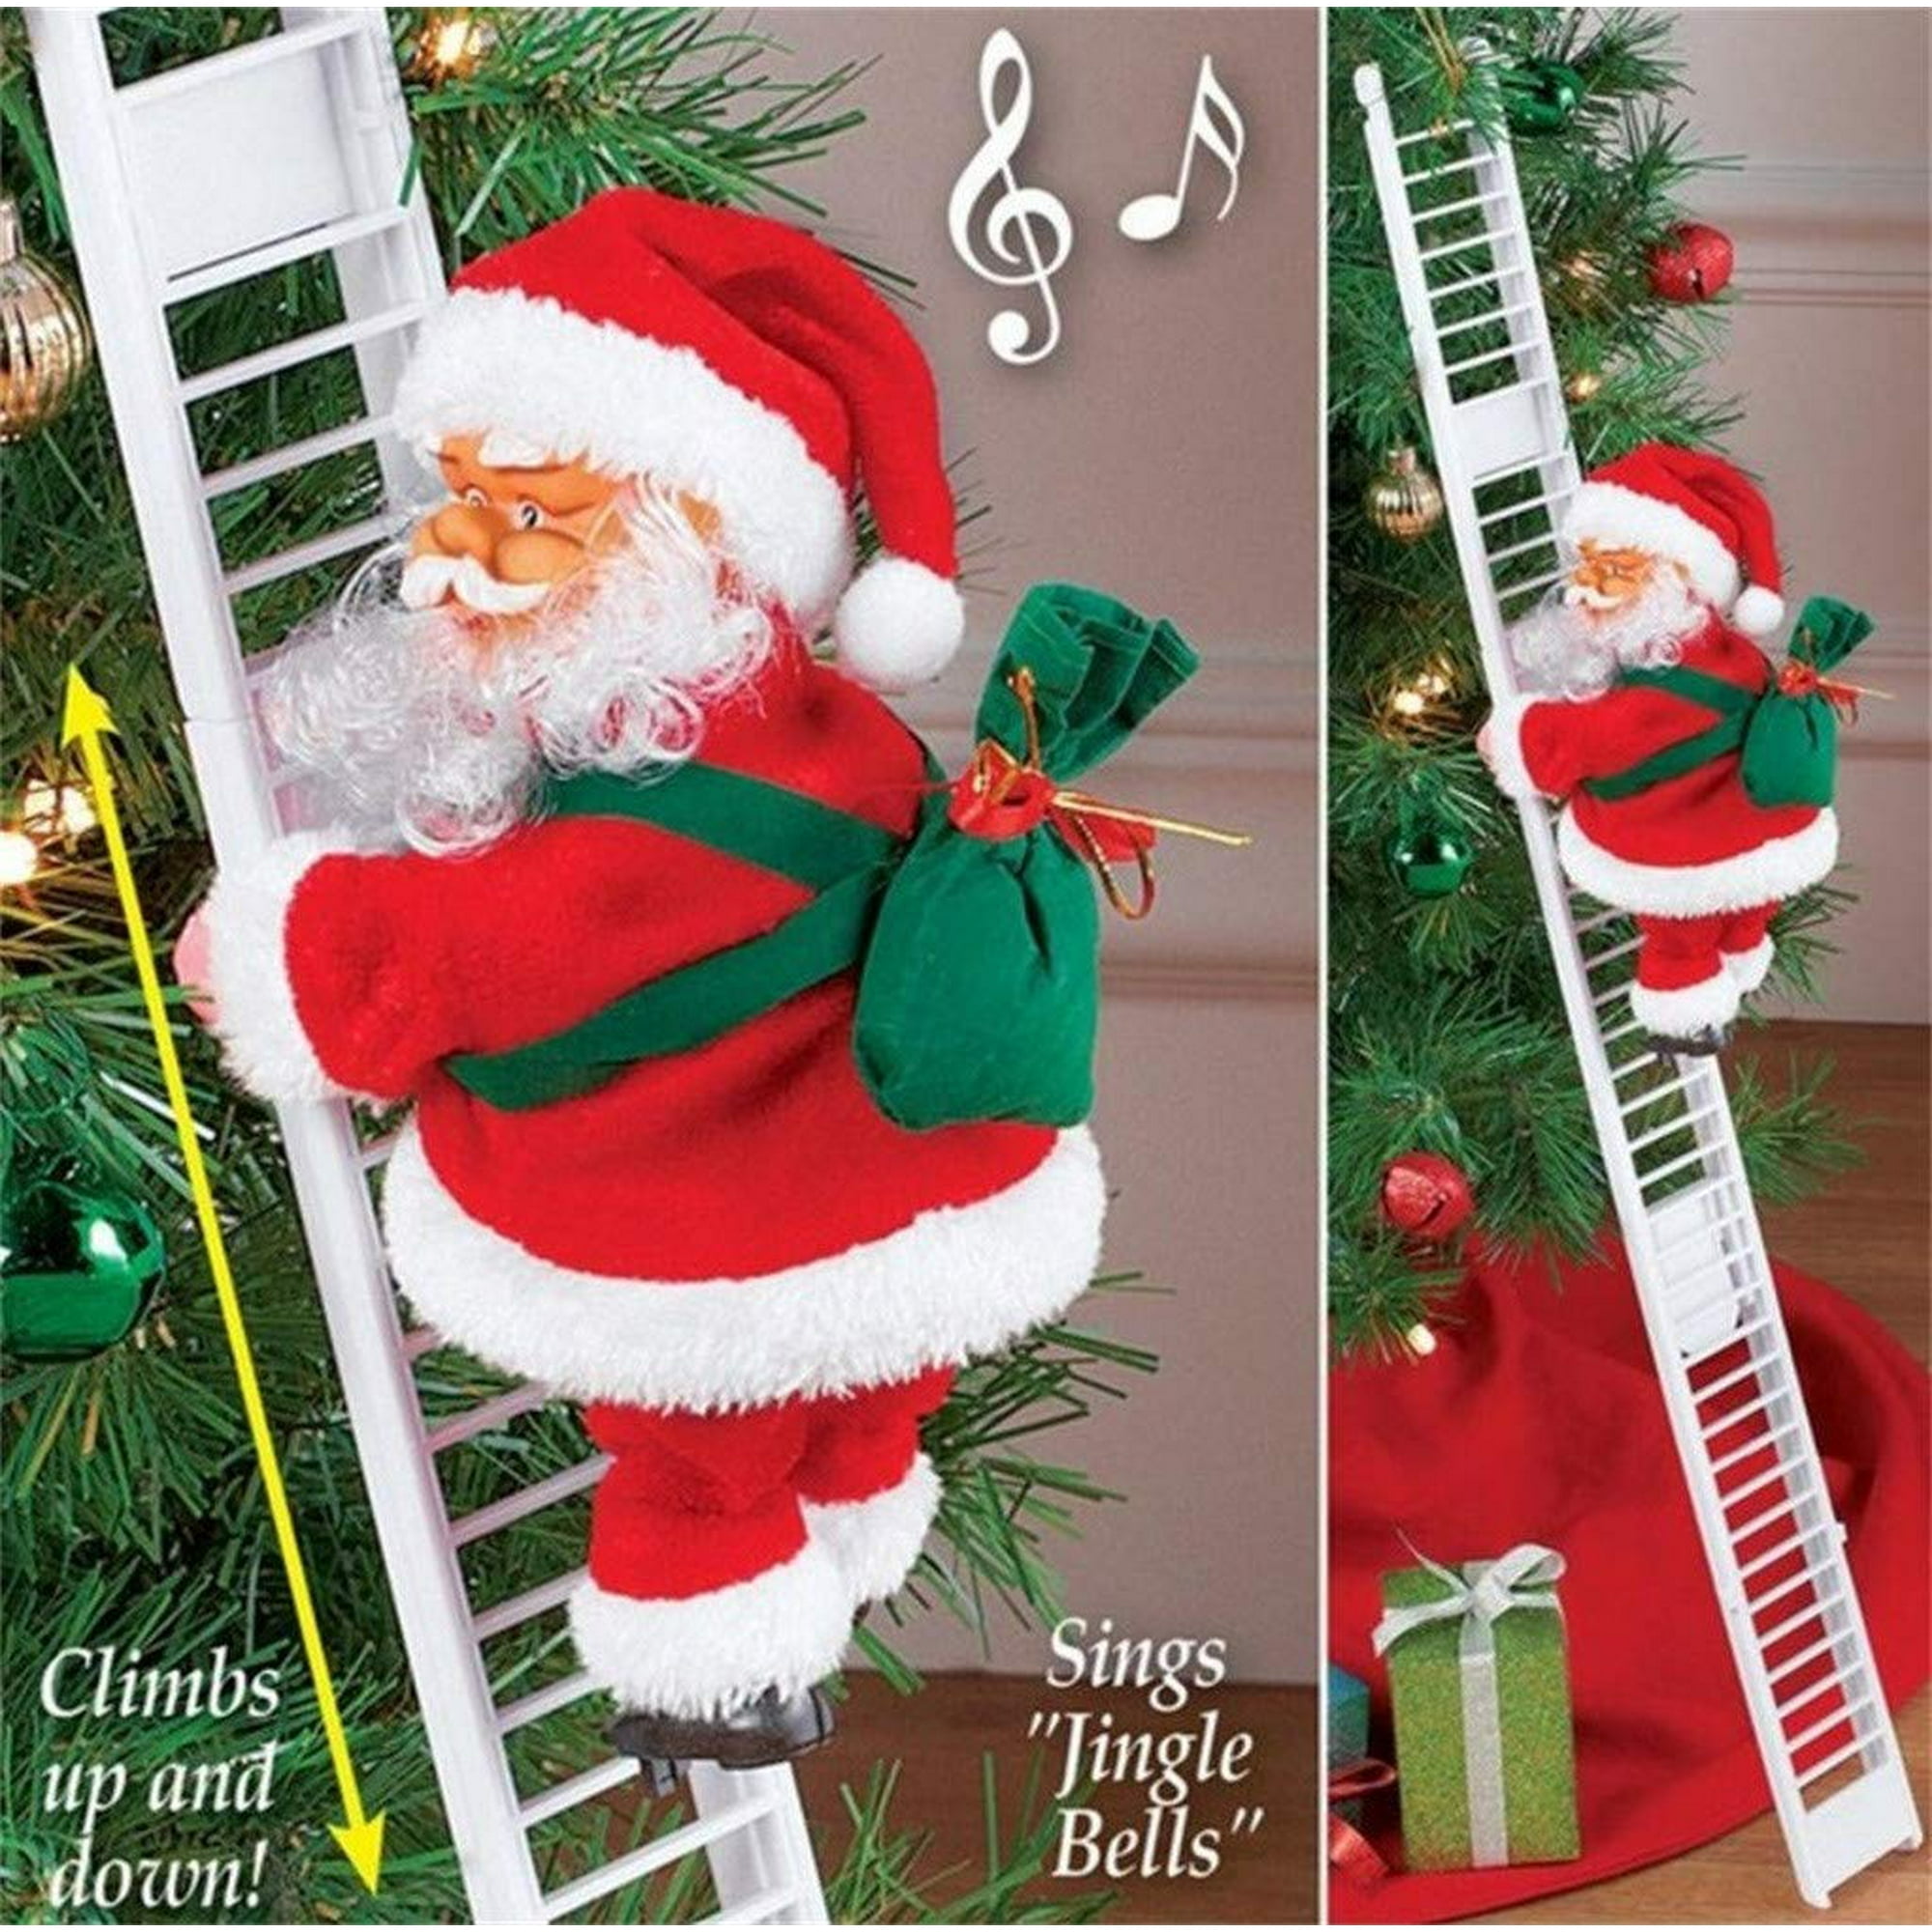 Santa Climbing Ladder Electric Santa Claus Climbing Rope Ladder Decoration, Christmas Super Climbing Santa Plush Doll Toy for Hanging Ornament Tree Indoor Outdoor Decoration